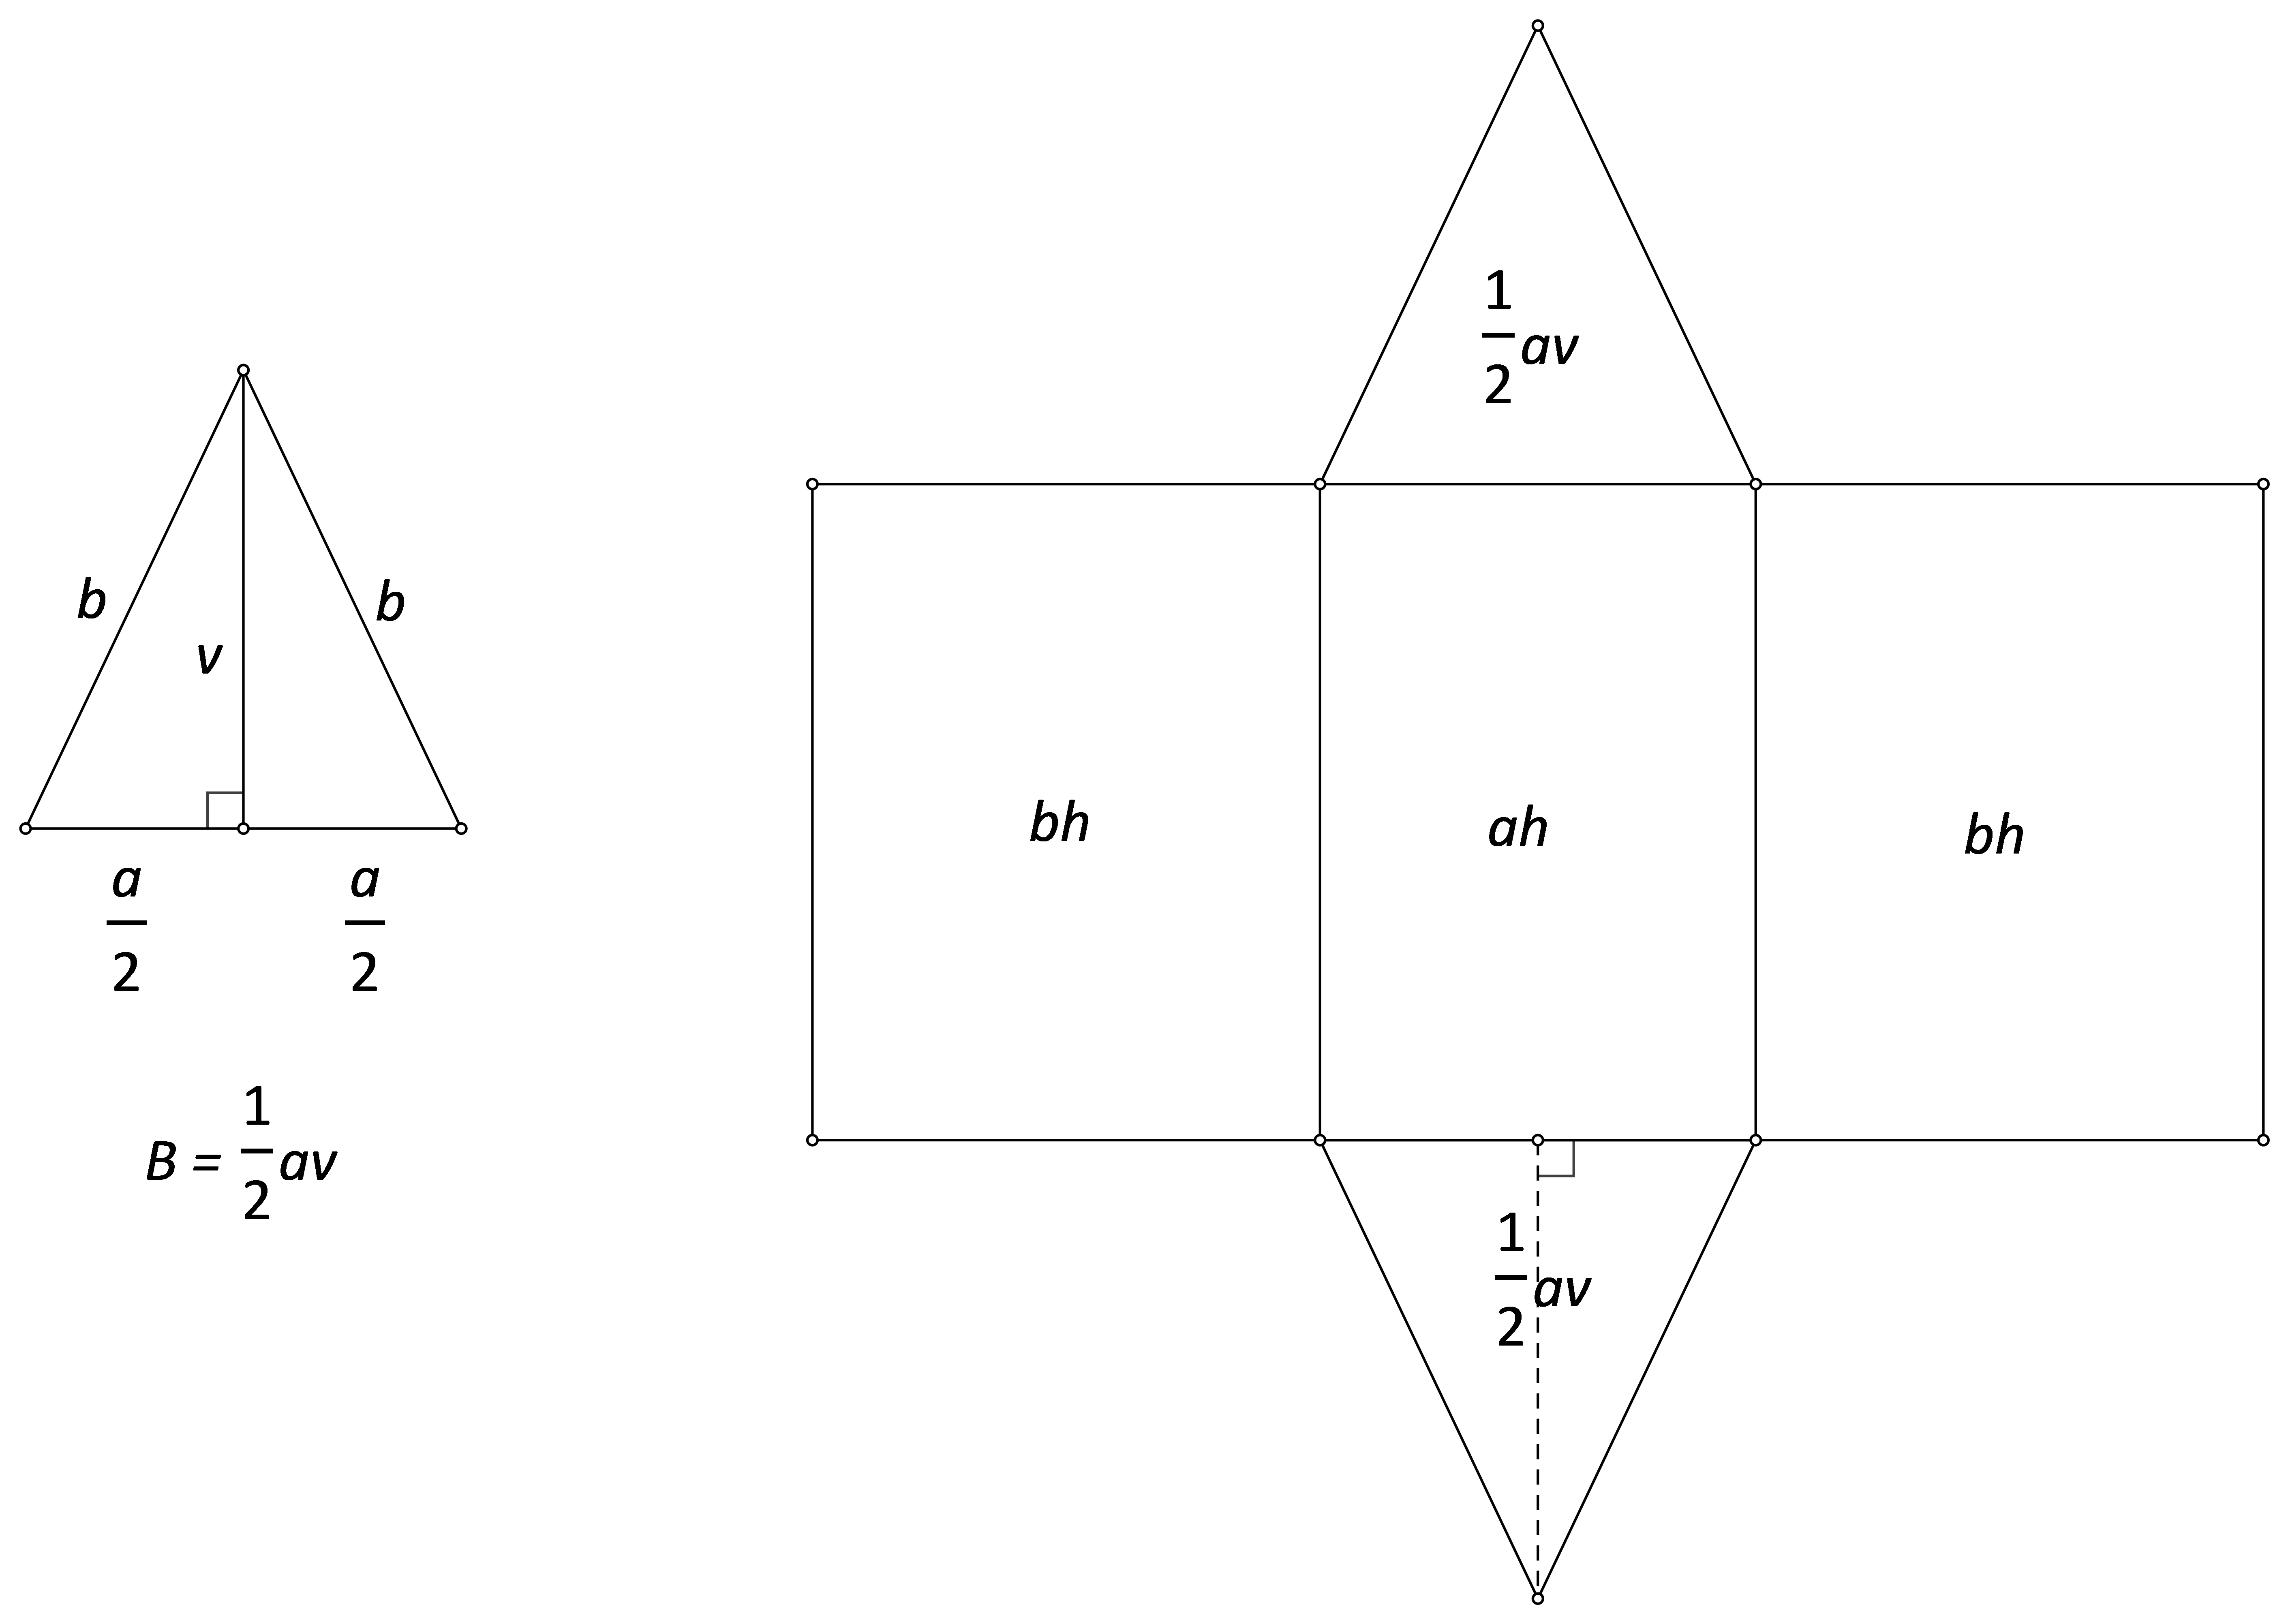 Slika prikazje površine strana prizme kojoj je baza jednakokračni trokut.